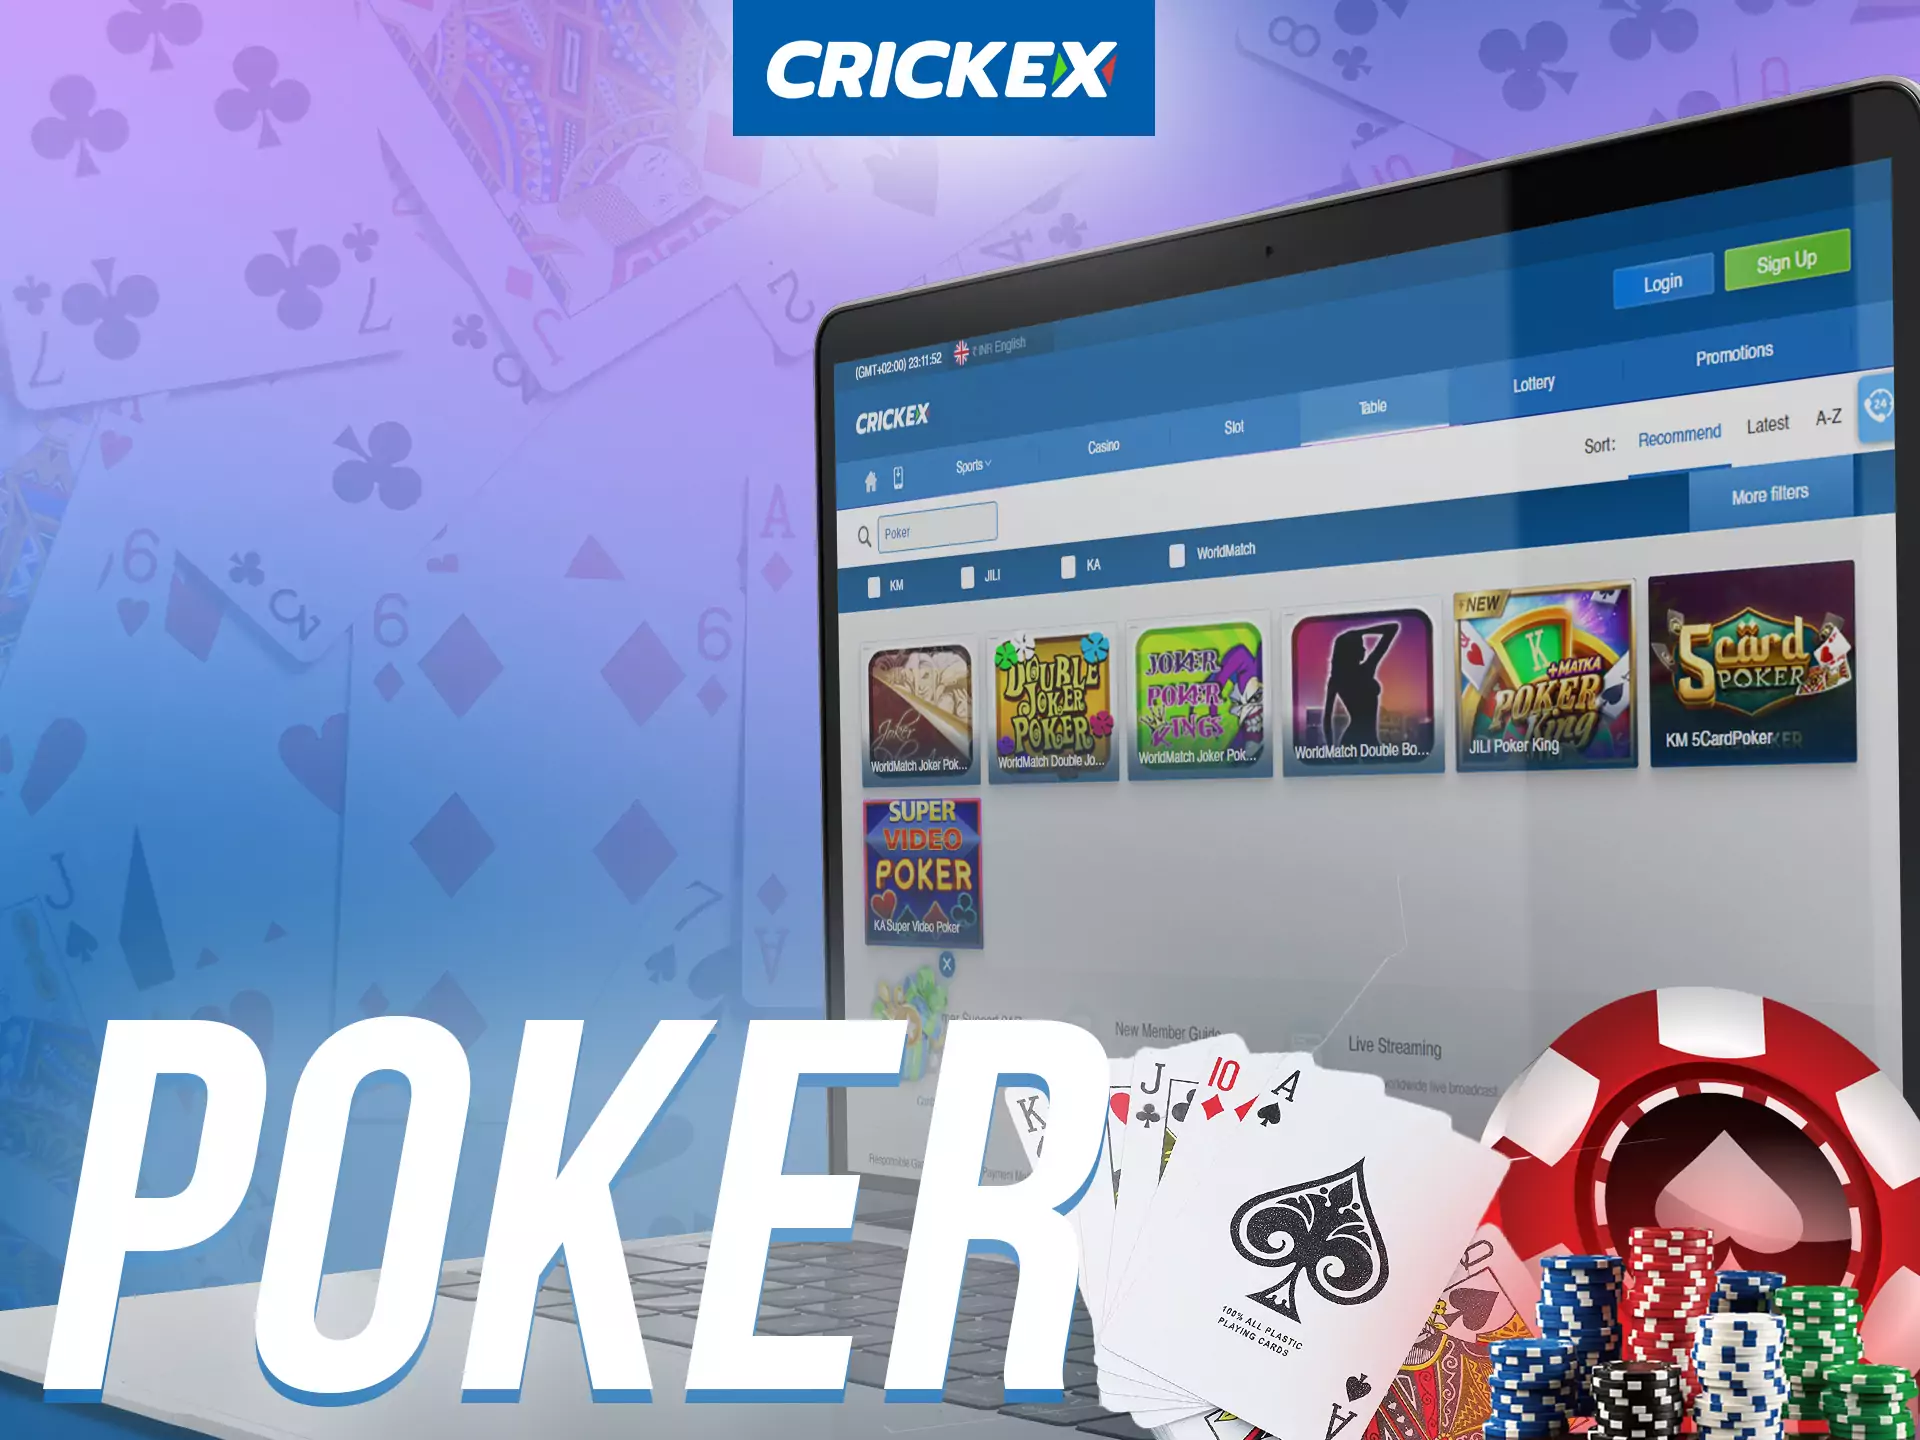 Play poker on Crickex.